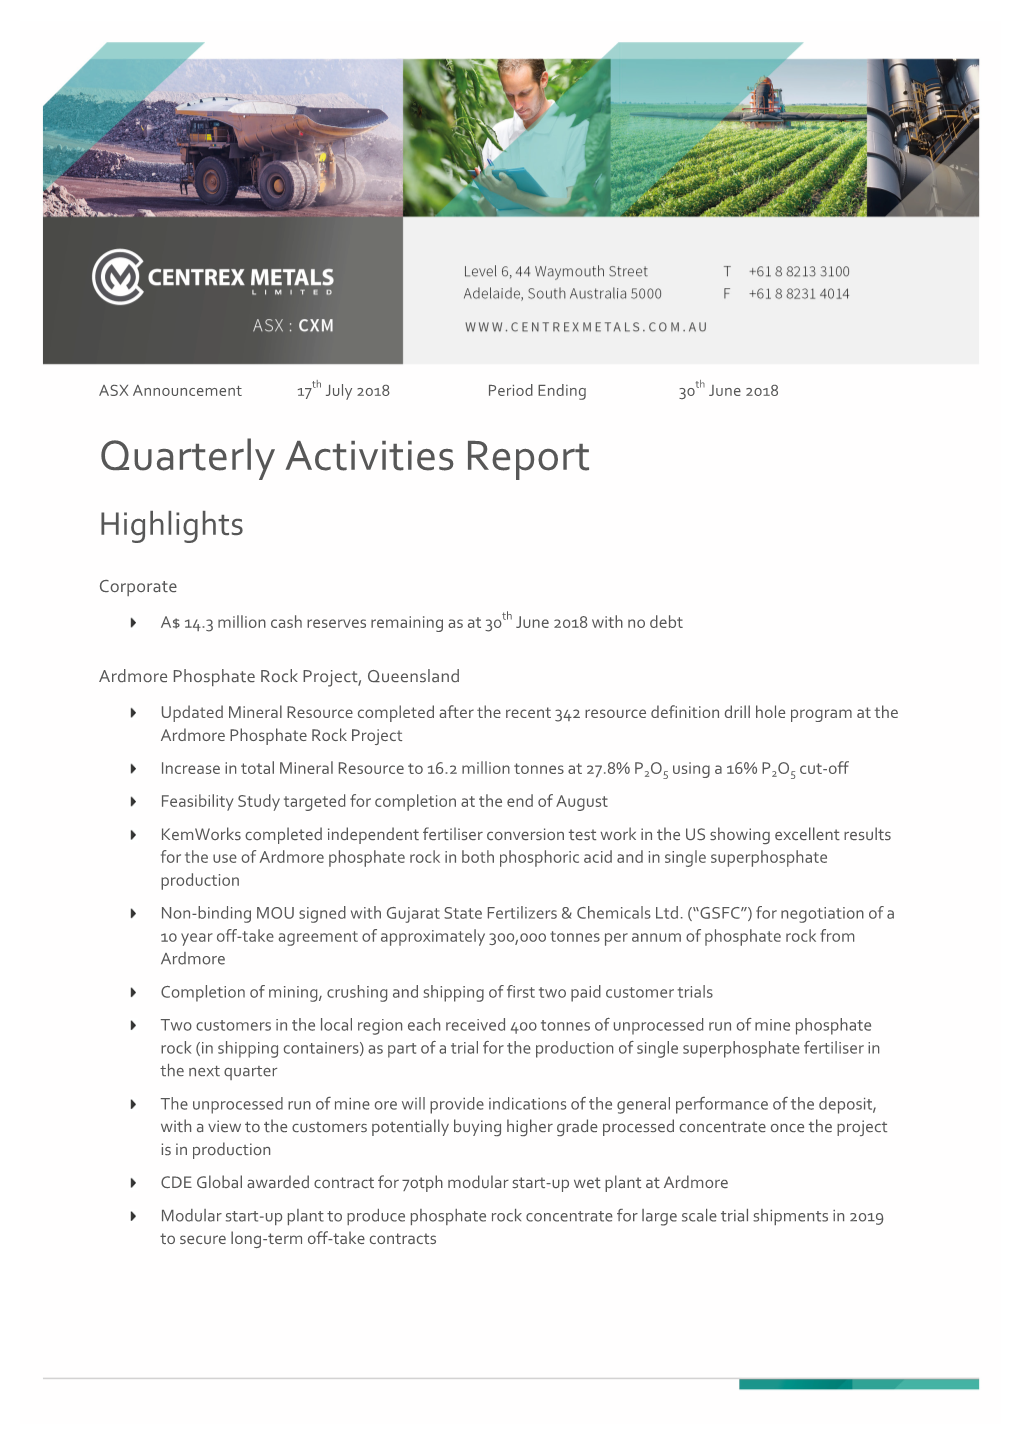 Quarterly Activities Report Highlights